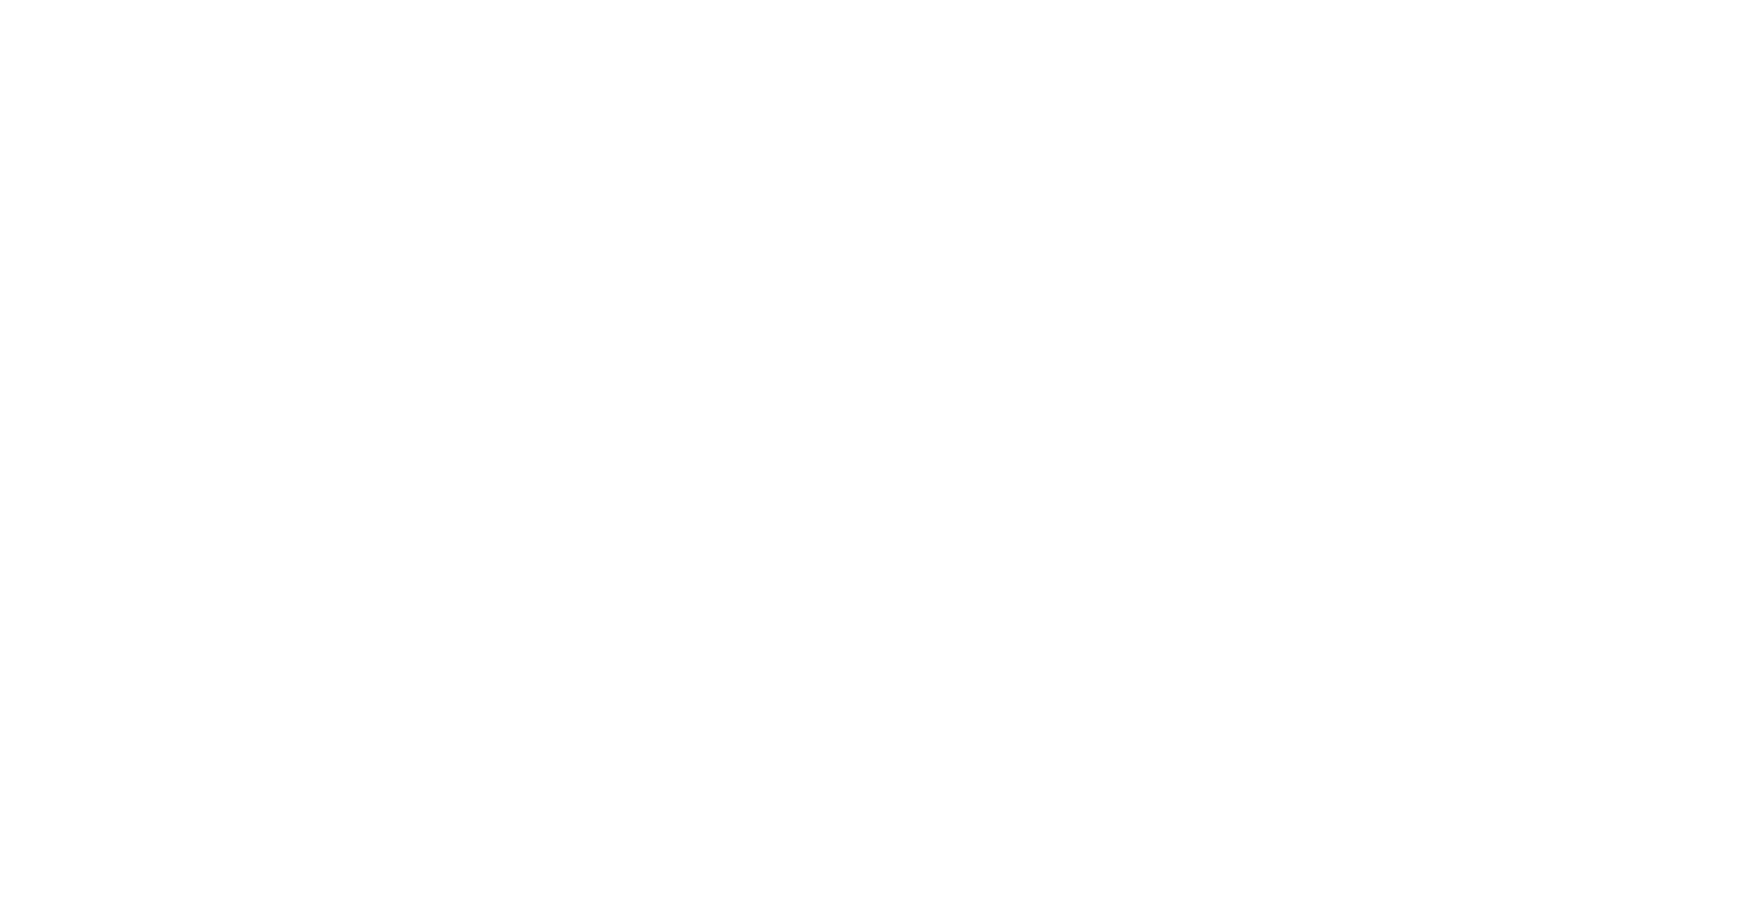 Logo Liminal Development